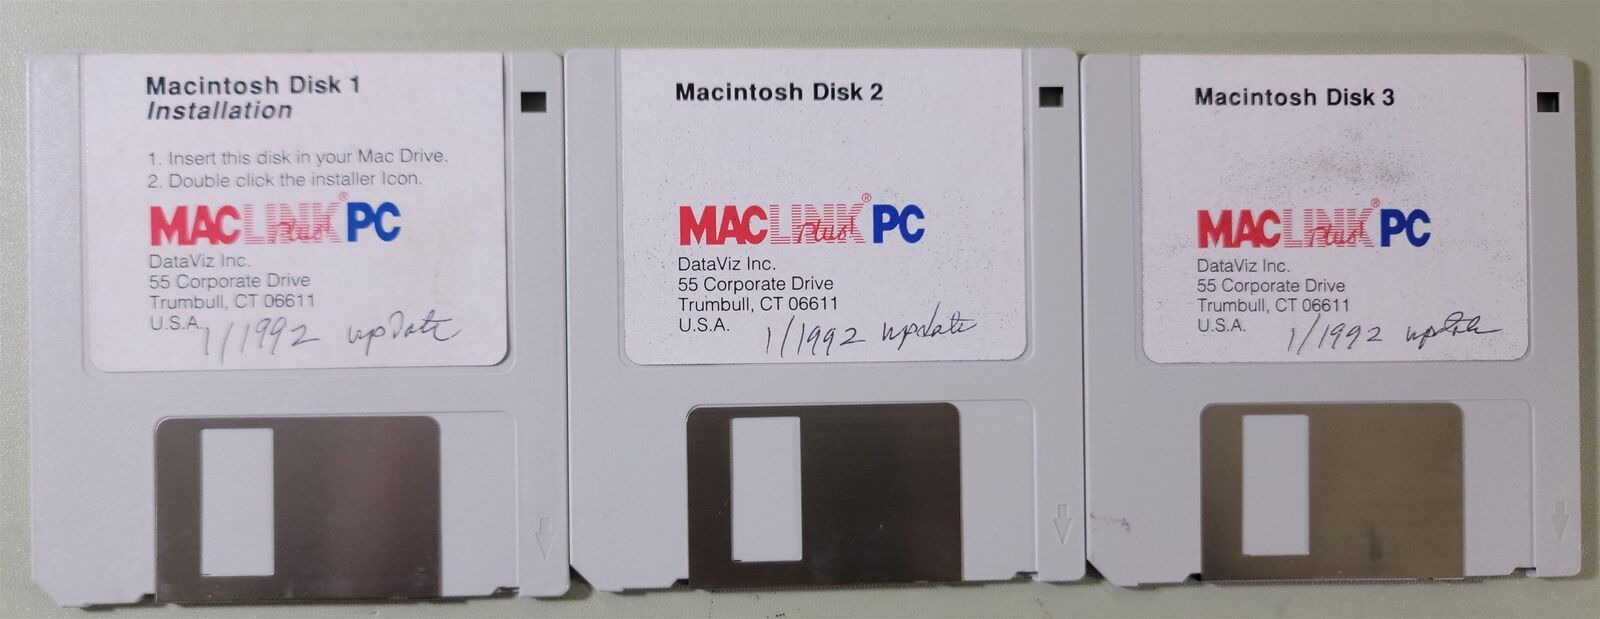 DataViz Mac Link Plus PC for Macintosh Installation Disk Media (x3)